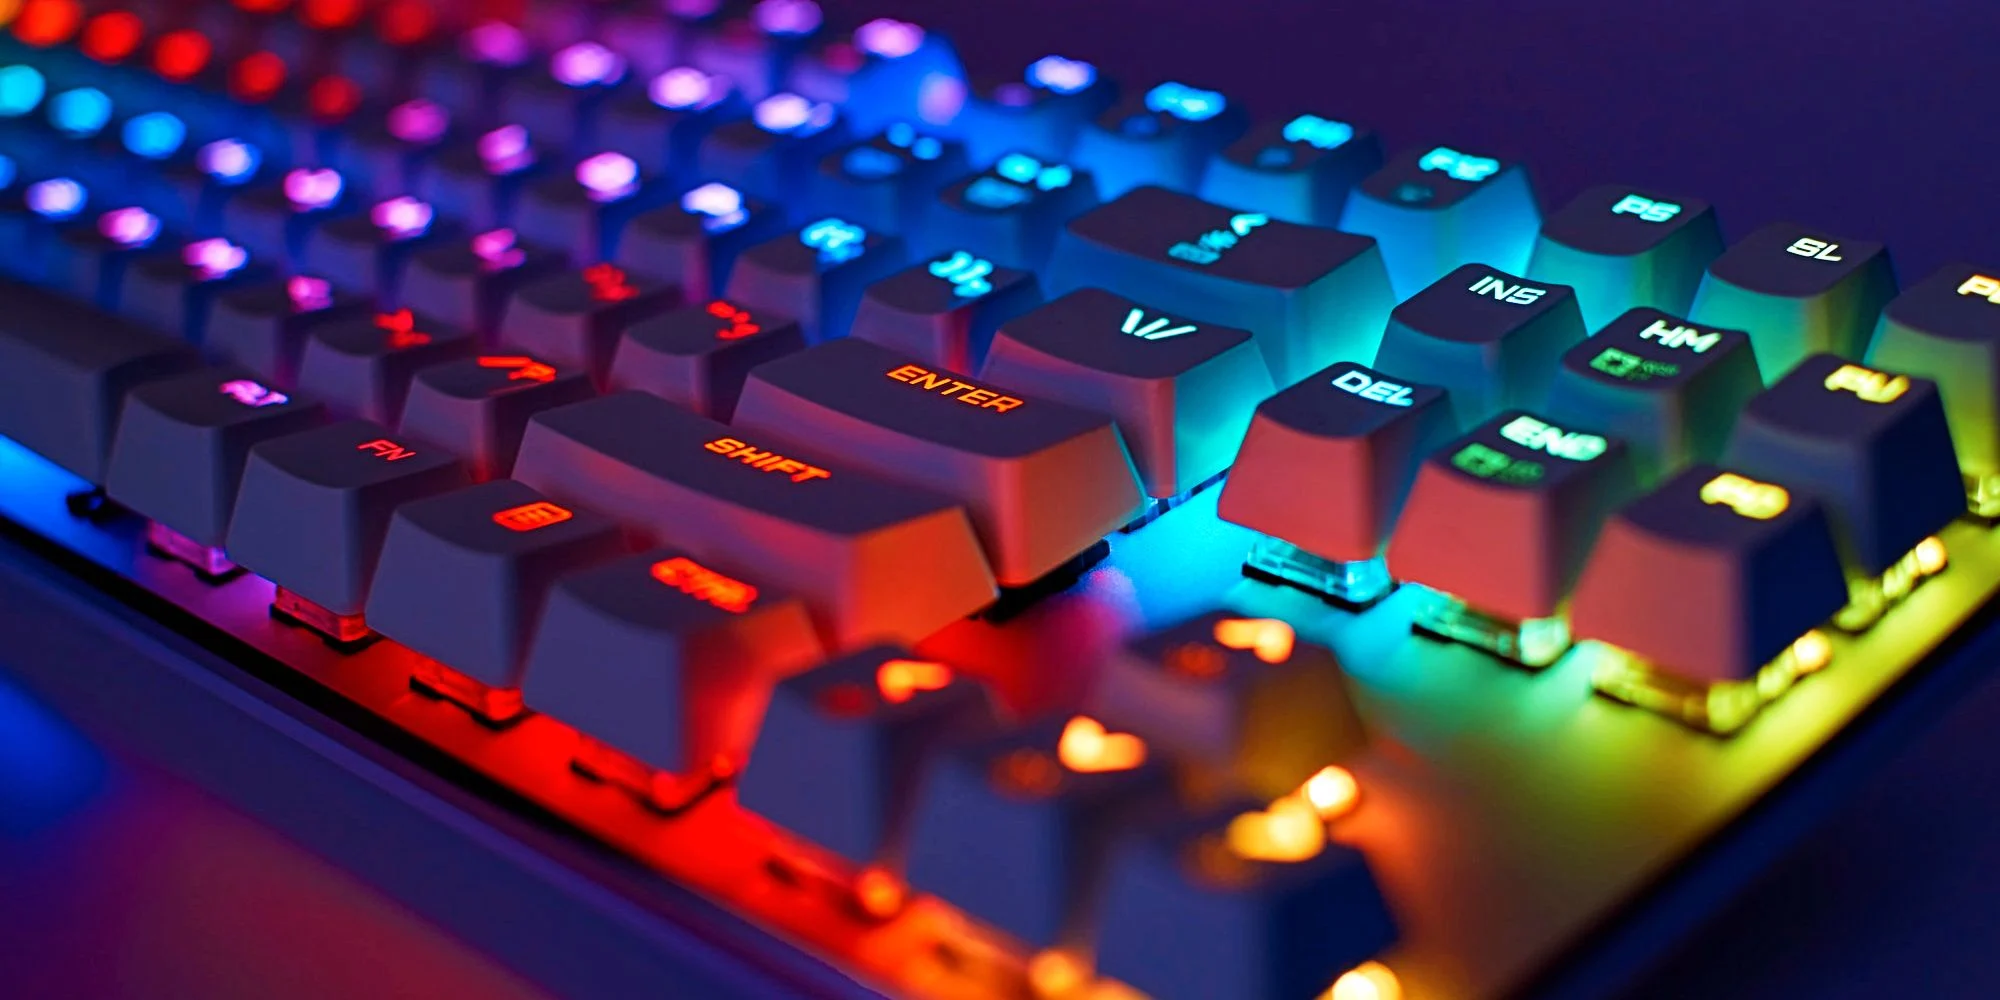 A mechanical keyboard with custom lighting